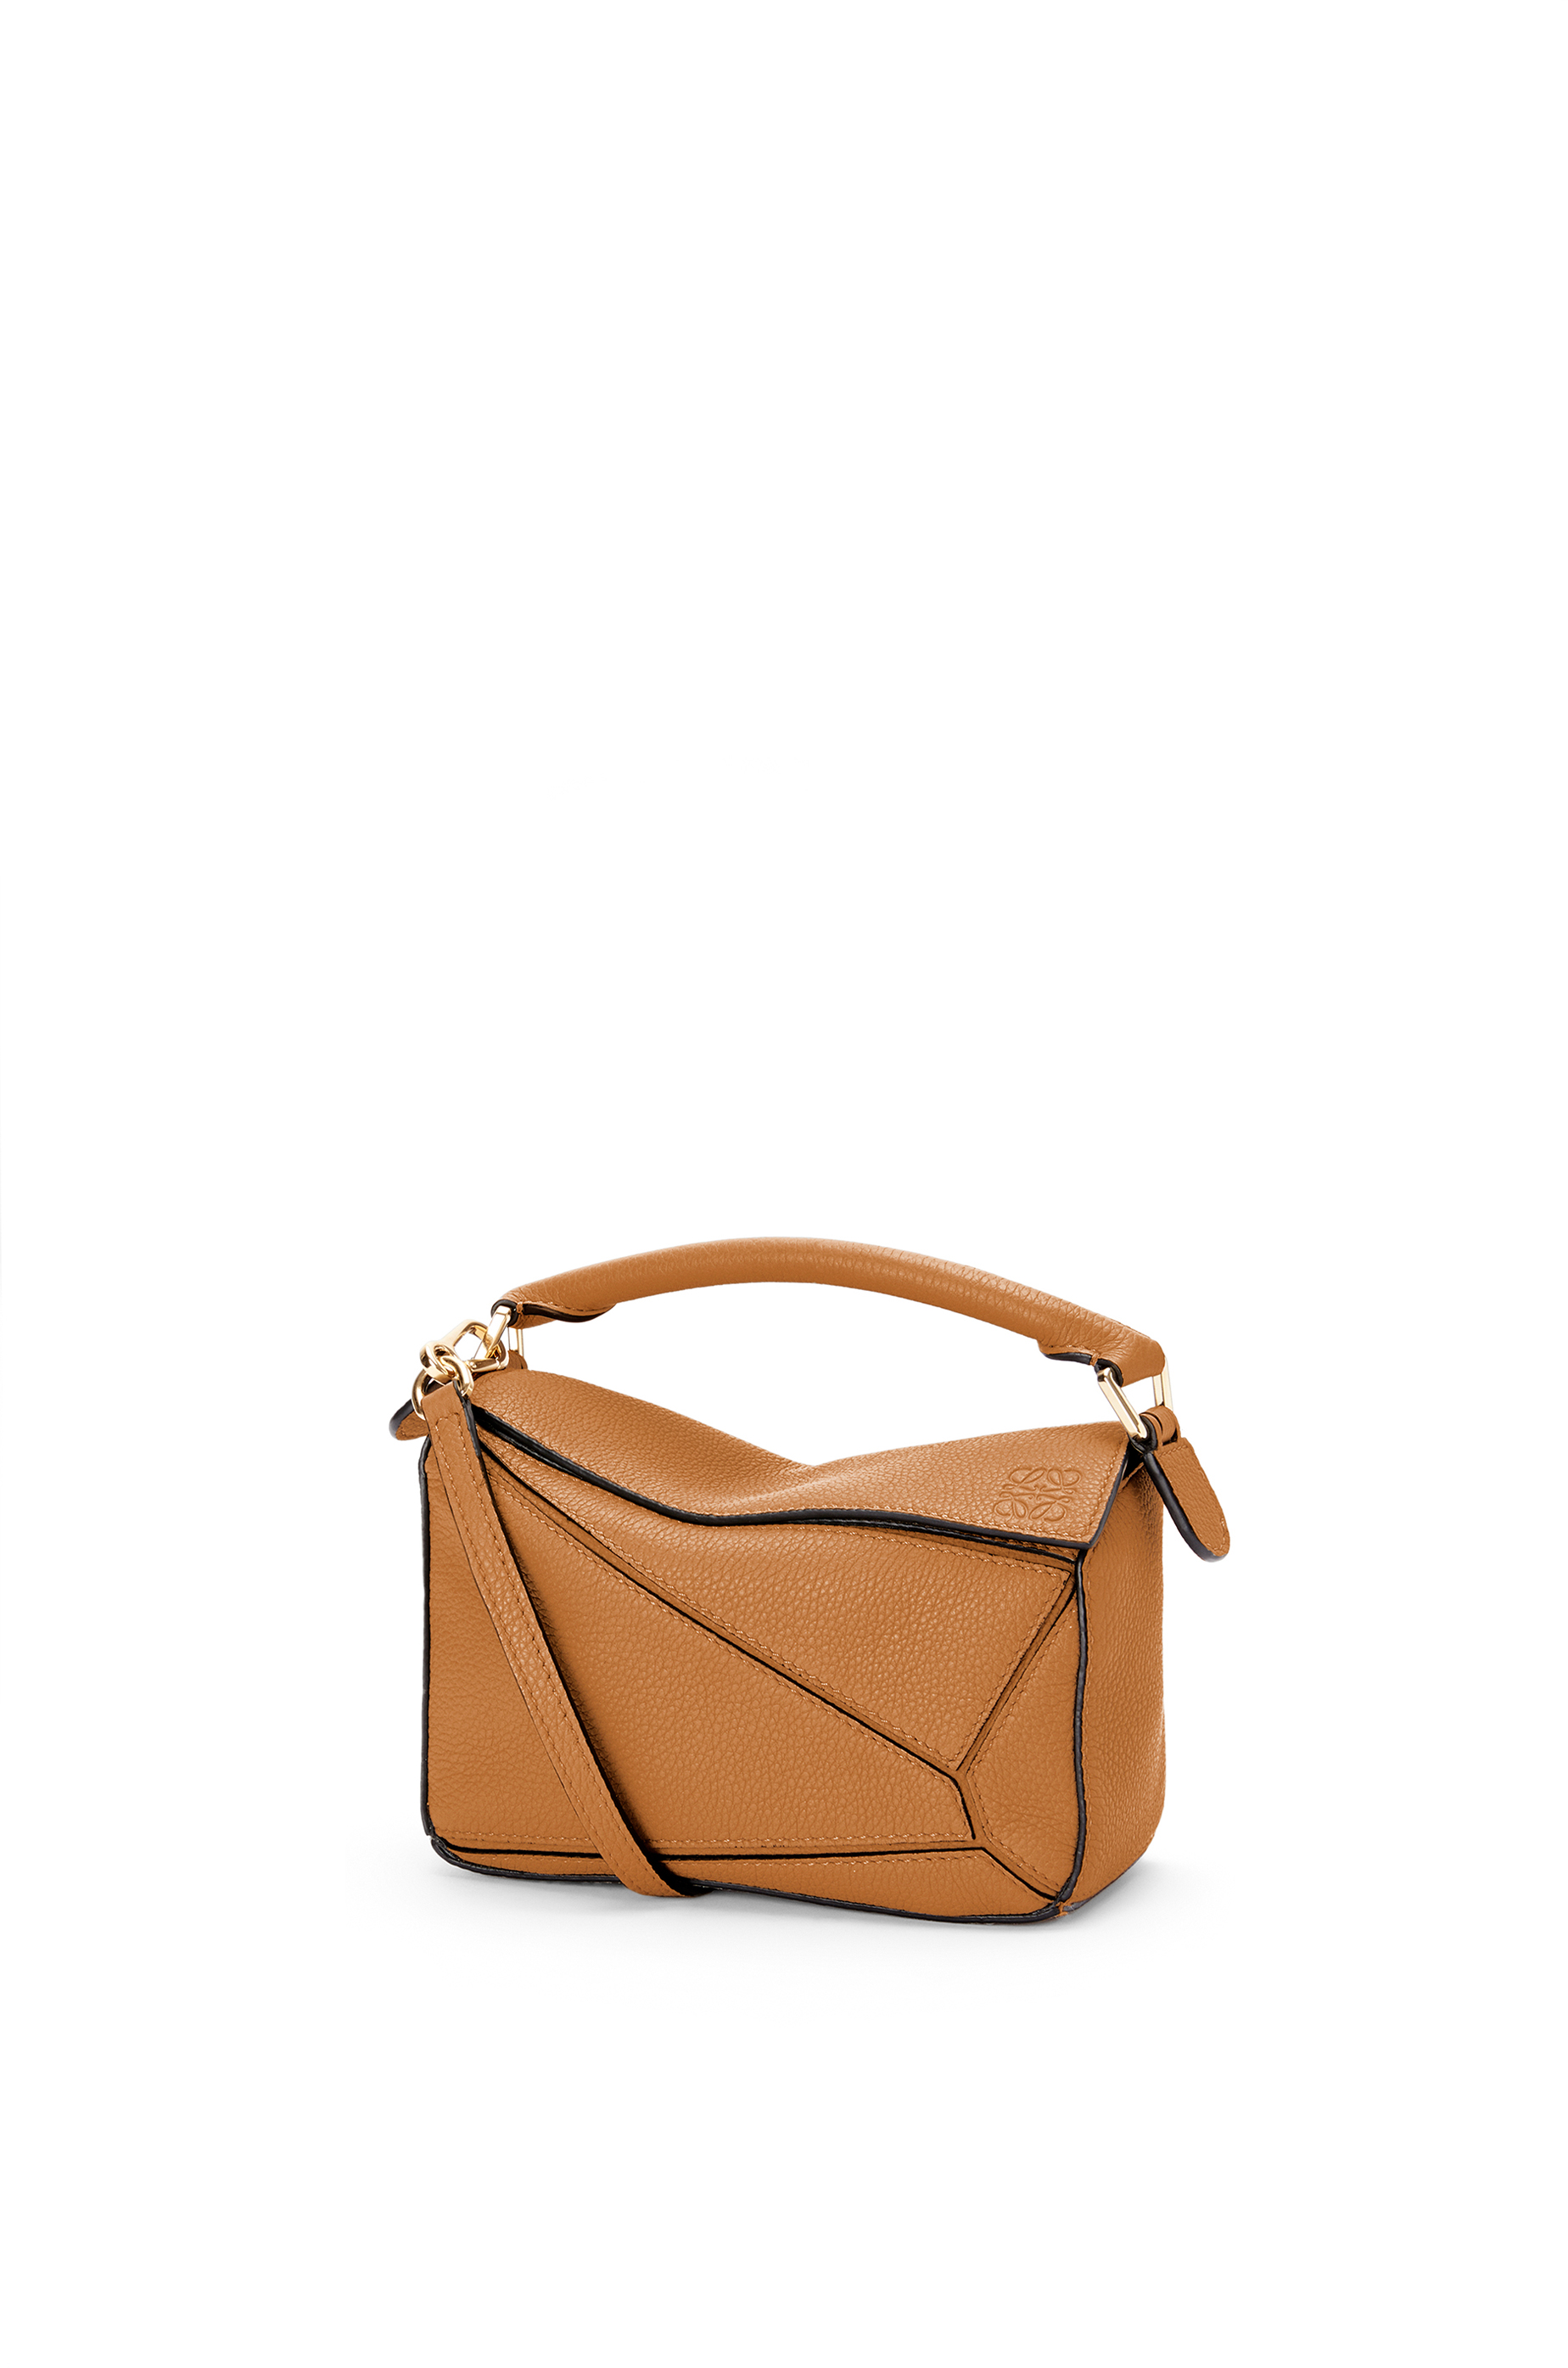 LOEWE brown Leather Puzzle Bag | Harrods UK